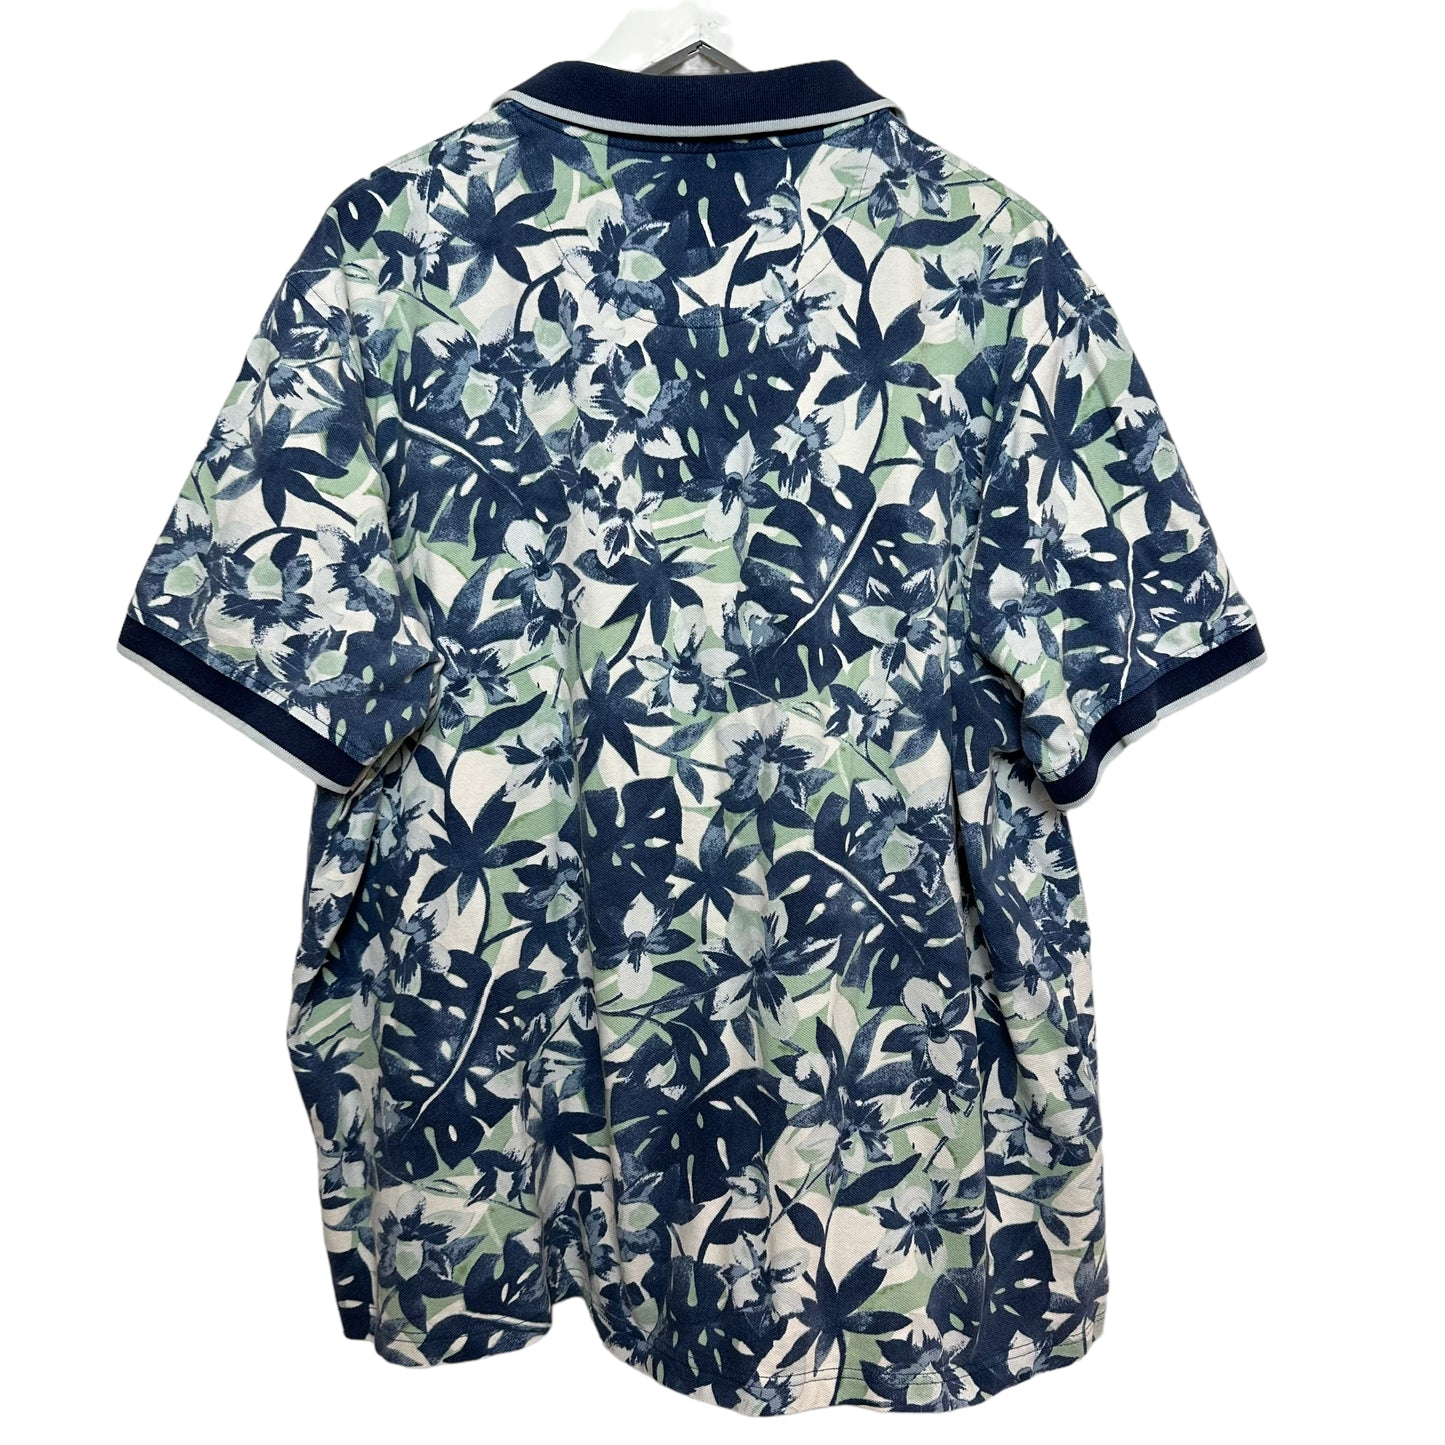 Lands End Tropical Print Polo Shirt Cotton Blue Green Floral XXL